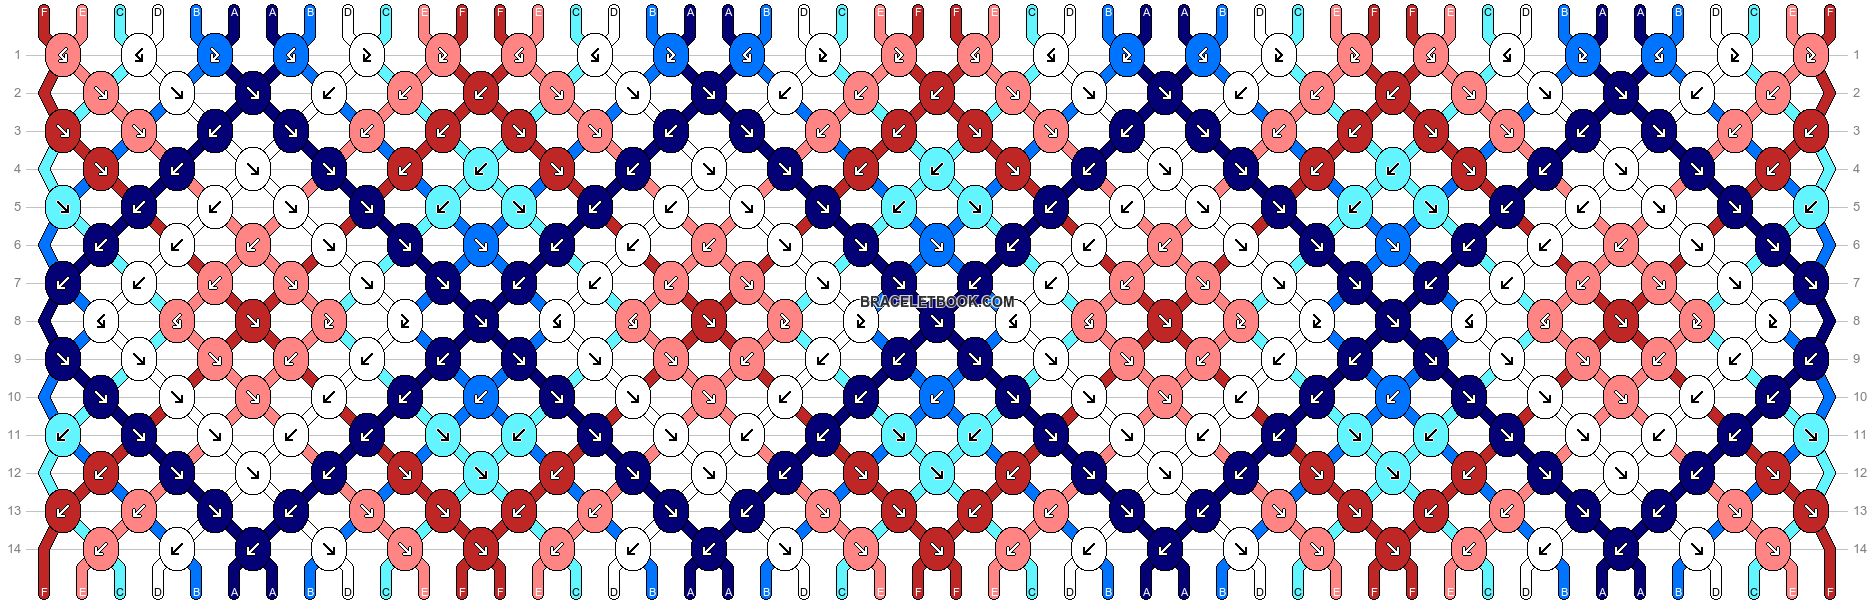 Normal pattern #48691 pattern